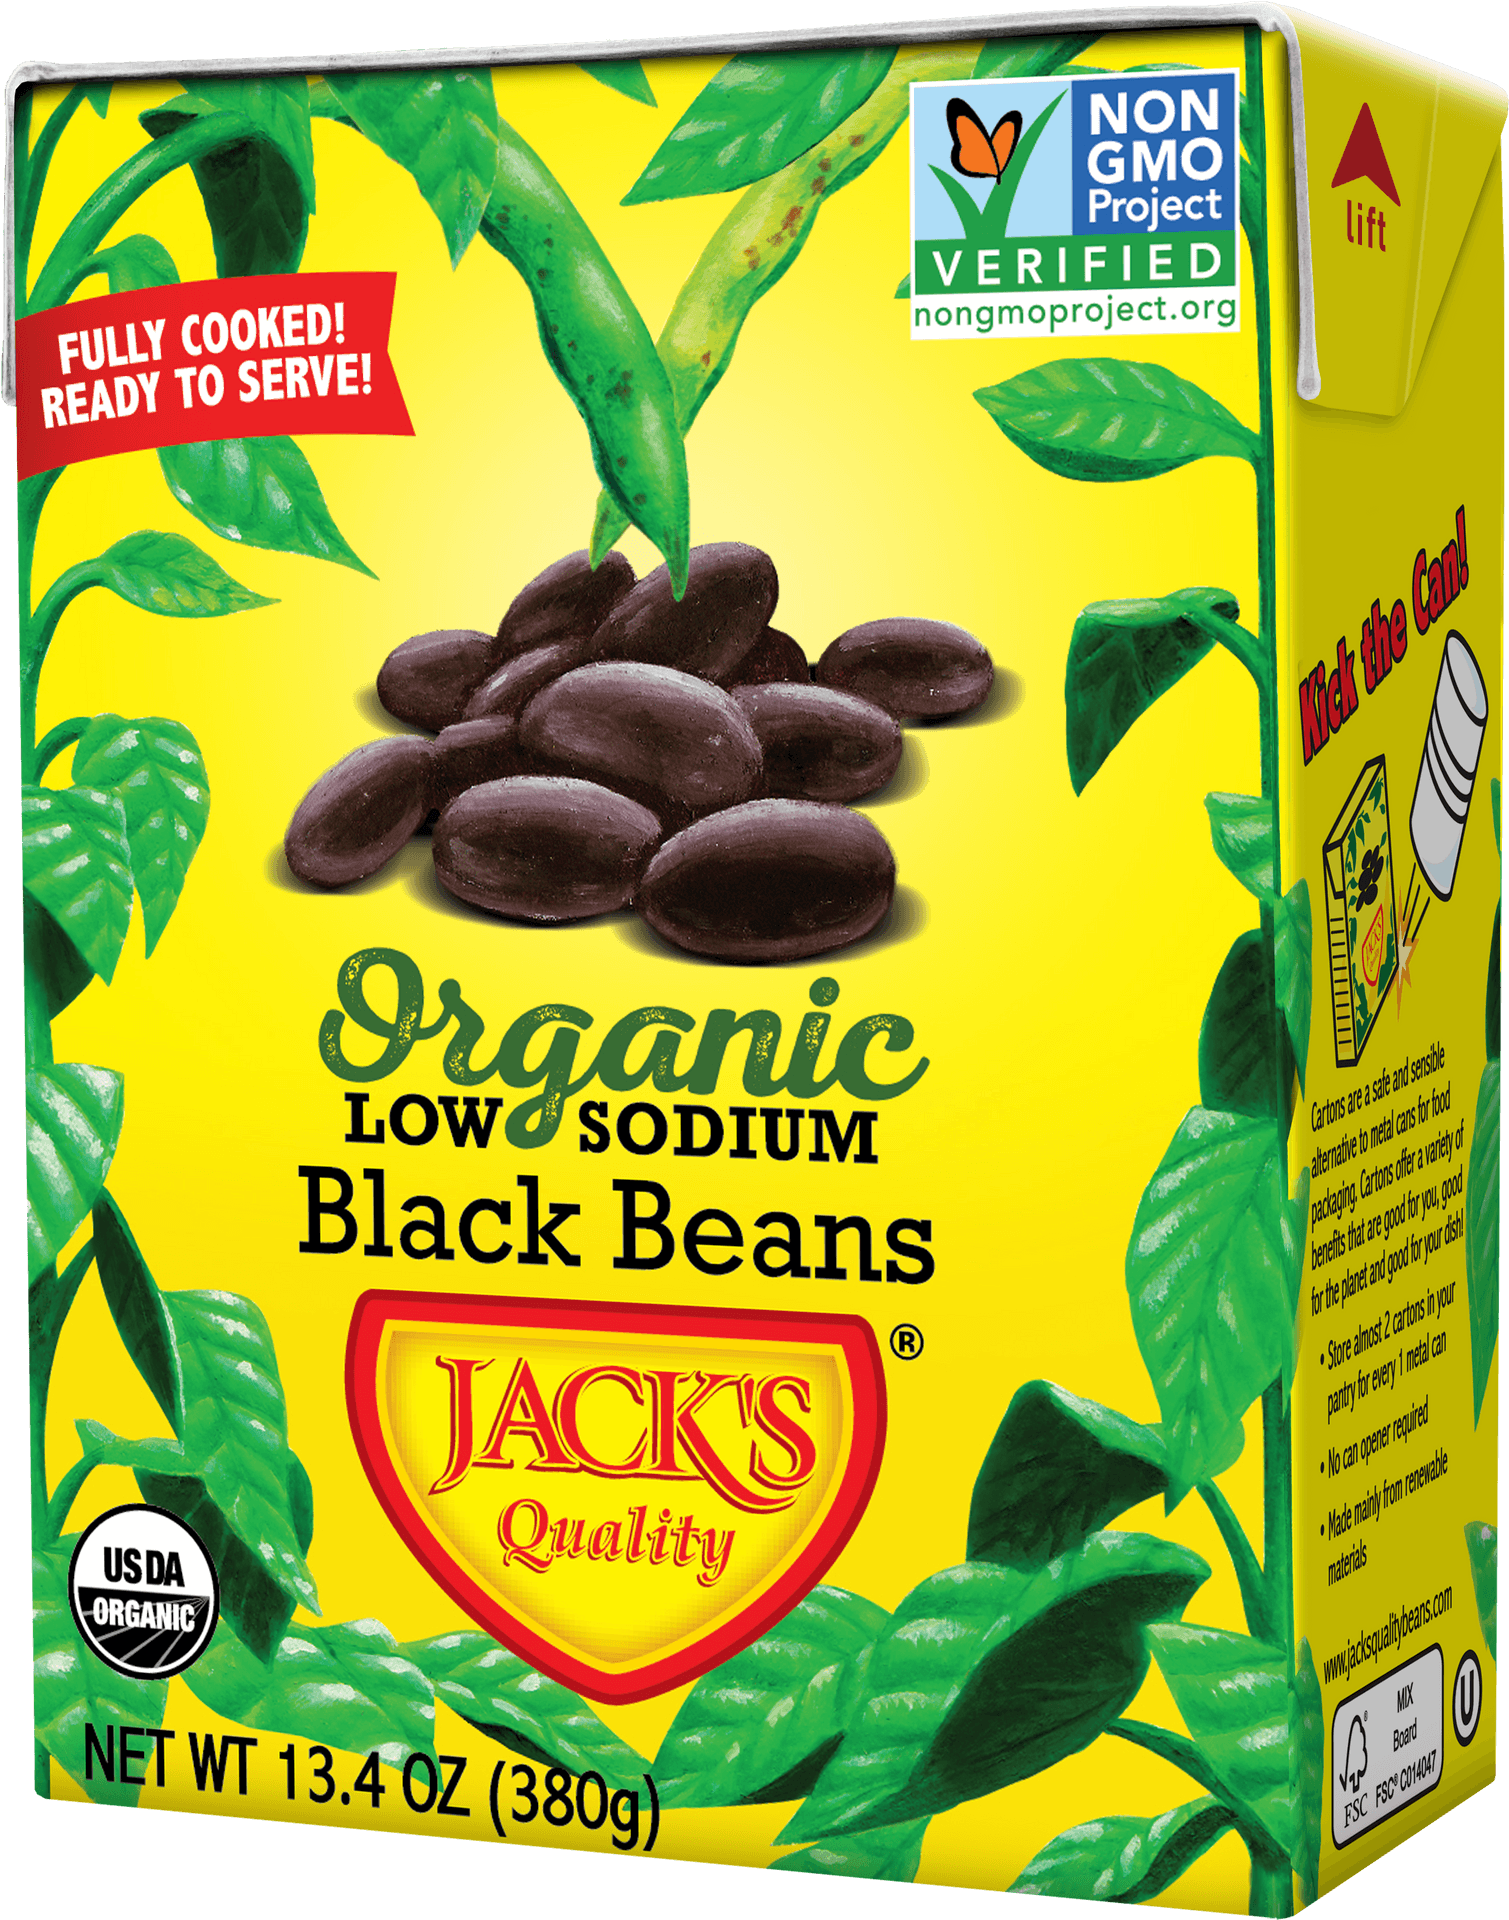 Organic Low Sodium Black Beans Packaging Jacks Quality PNG